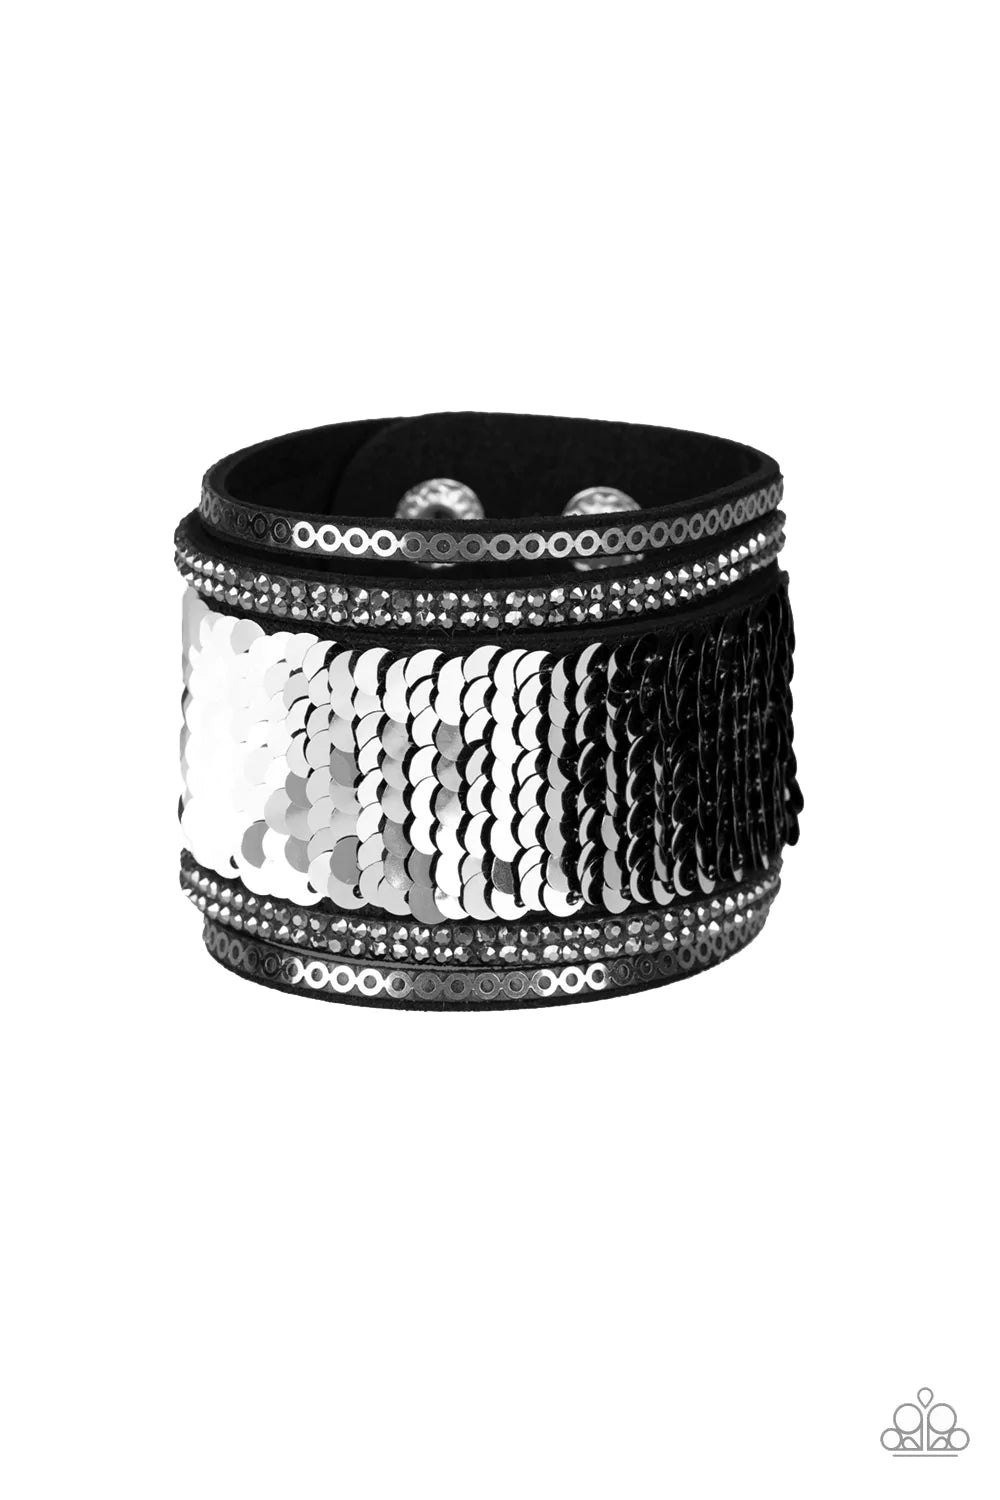 Heads Or MERMAID Tails - Black & Silver Bracelet - Princess Glam Shop